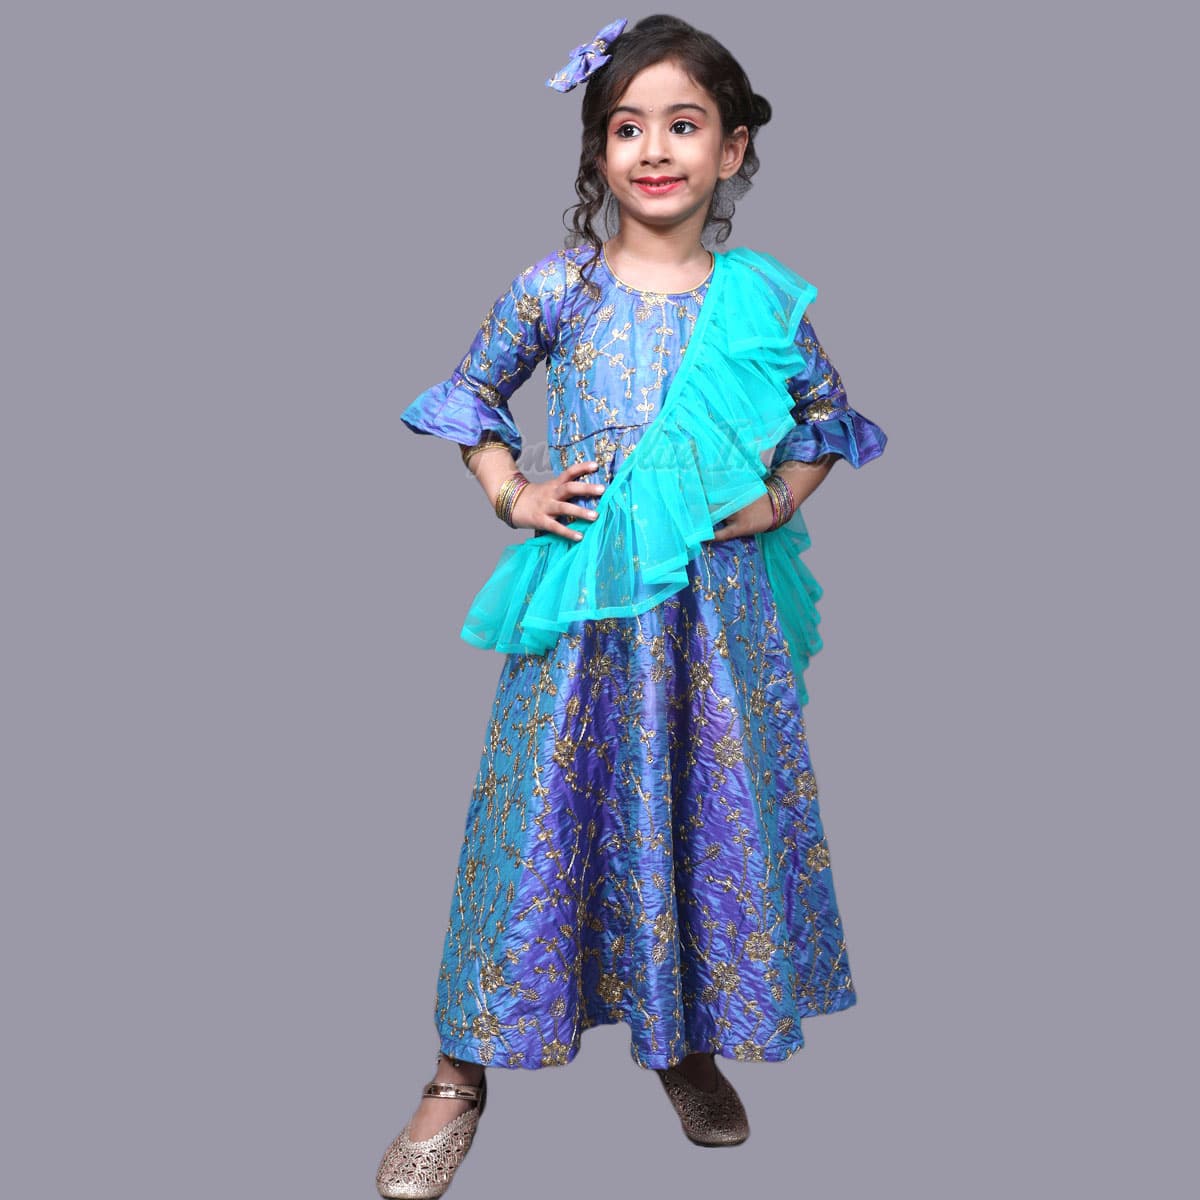 Girls Blue Ethnic Wear - Buy Indian Designer Girls Ethnic Wear Gown